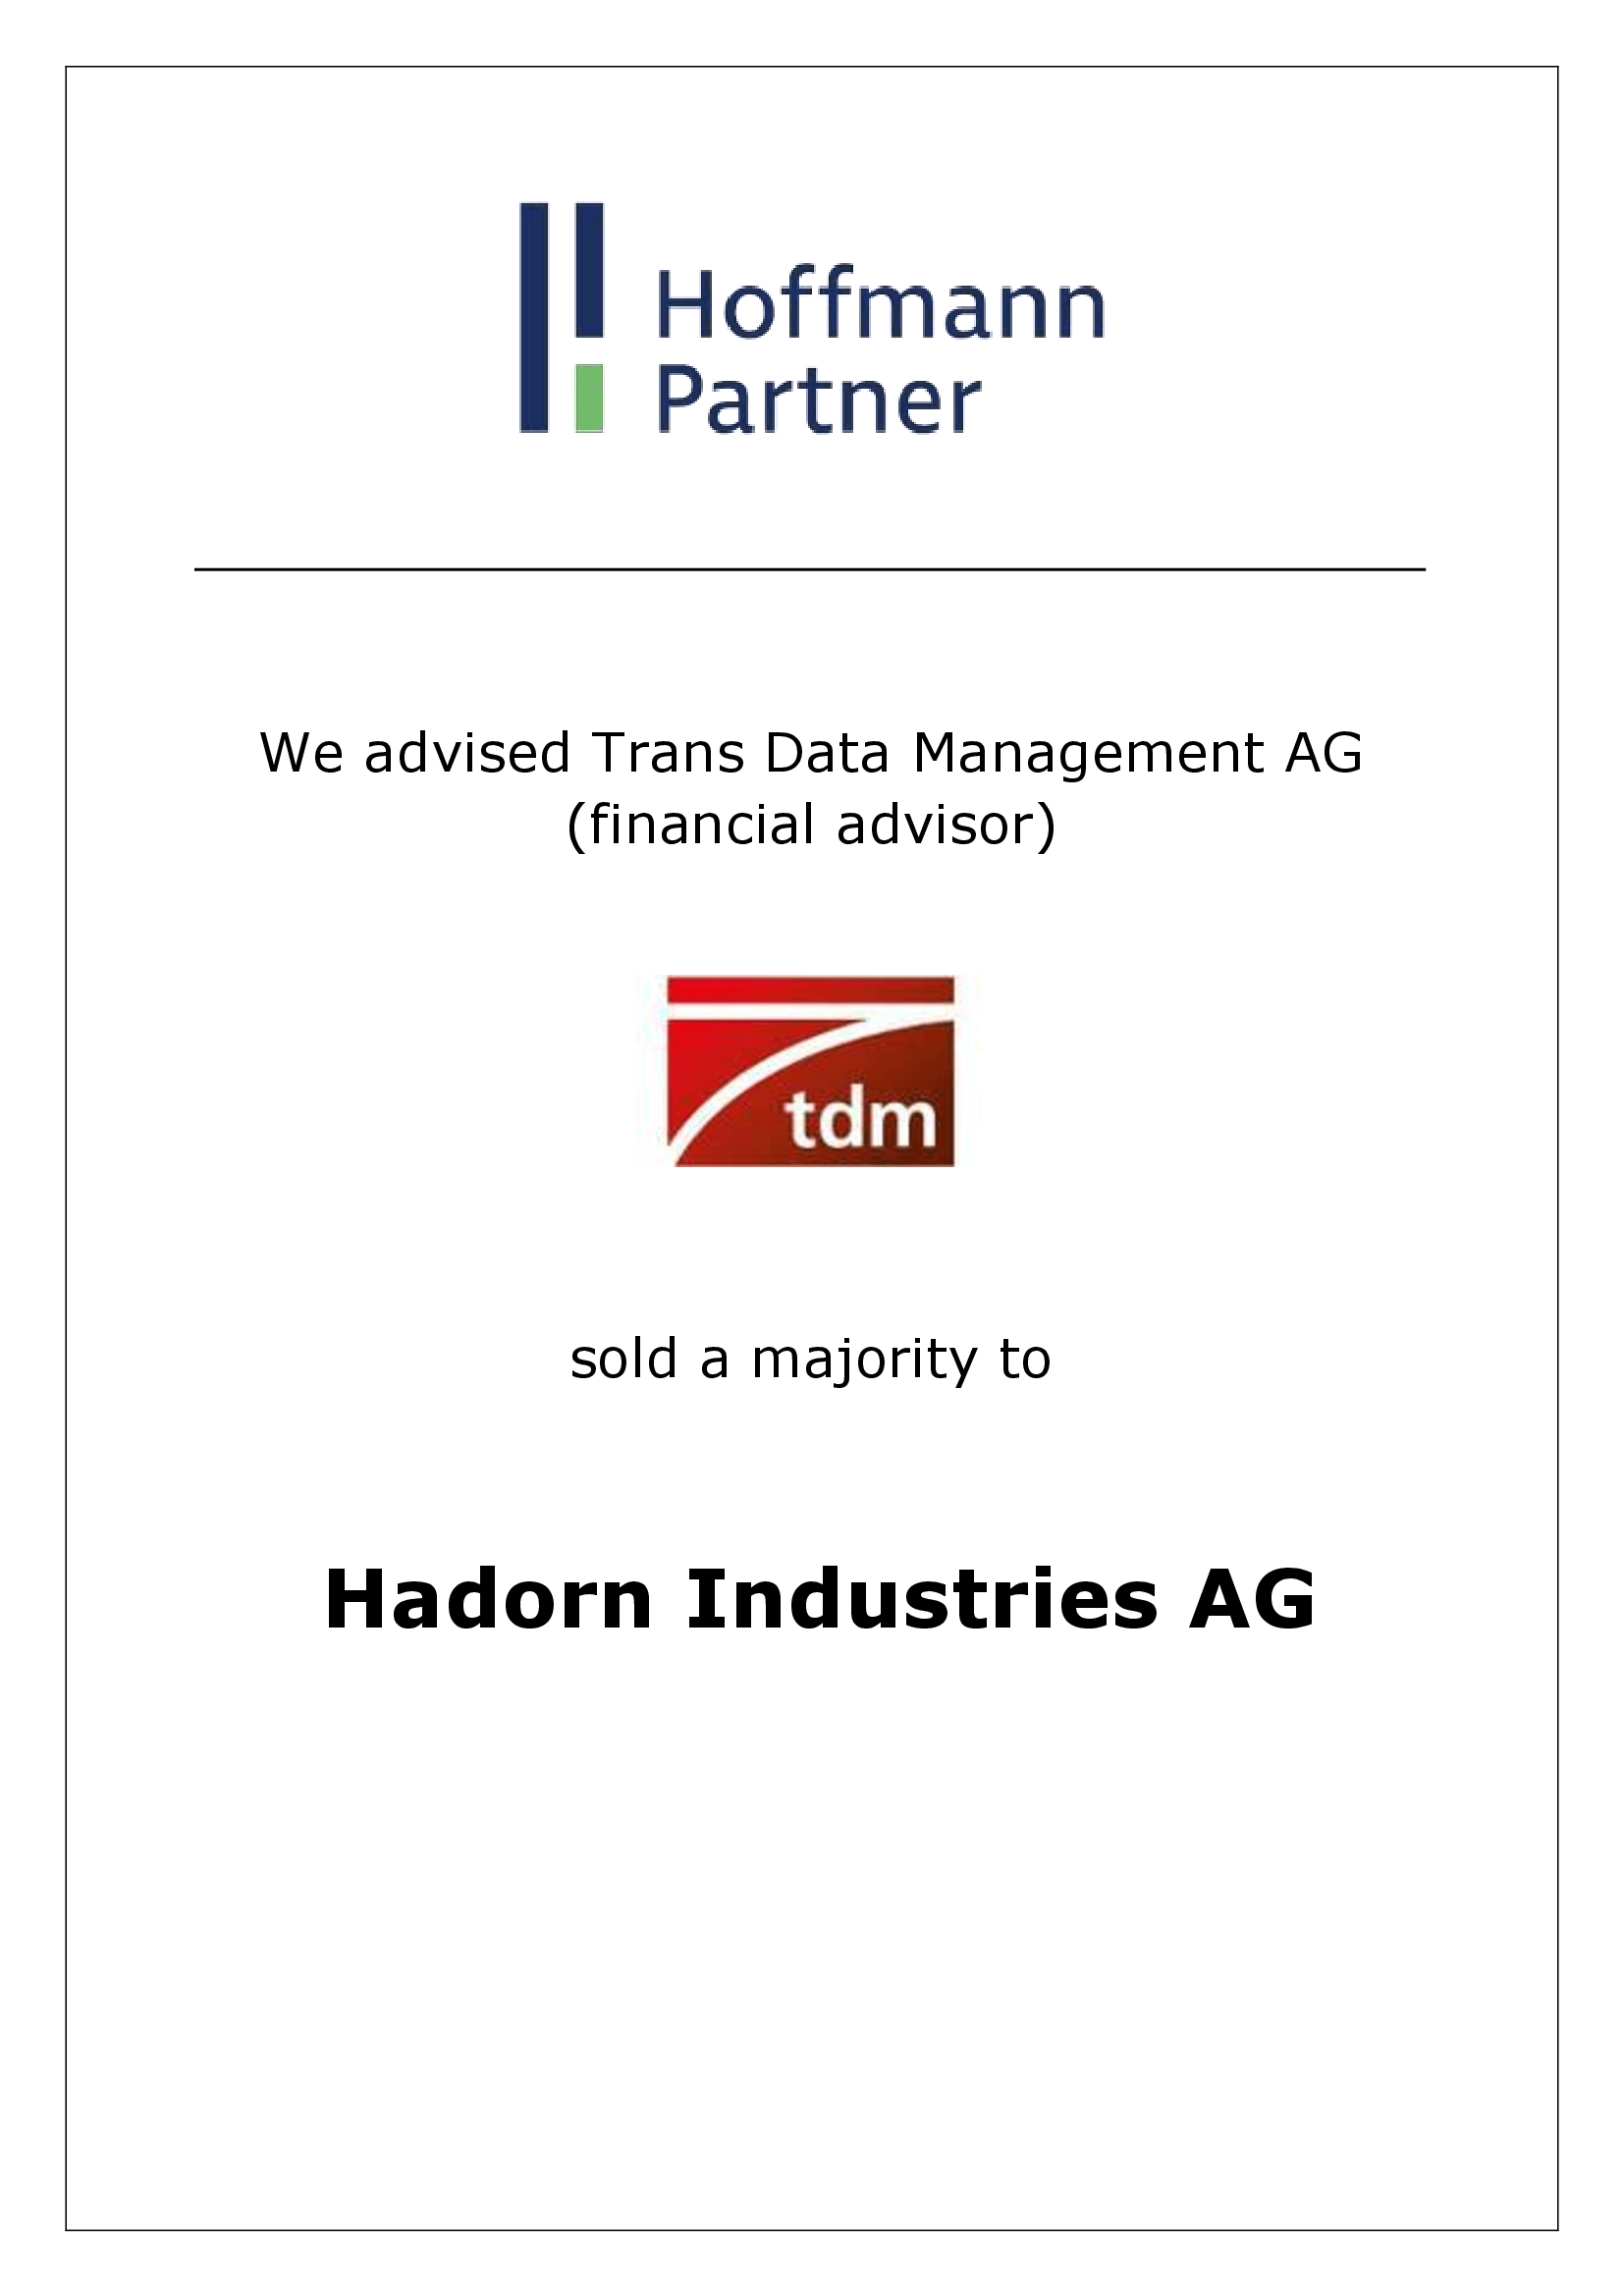 Hadorn Industries AG